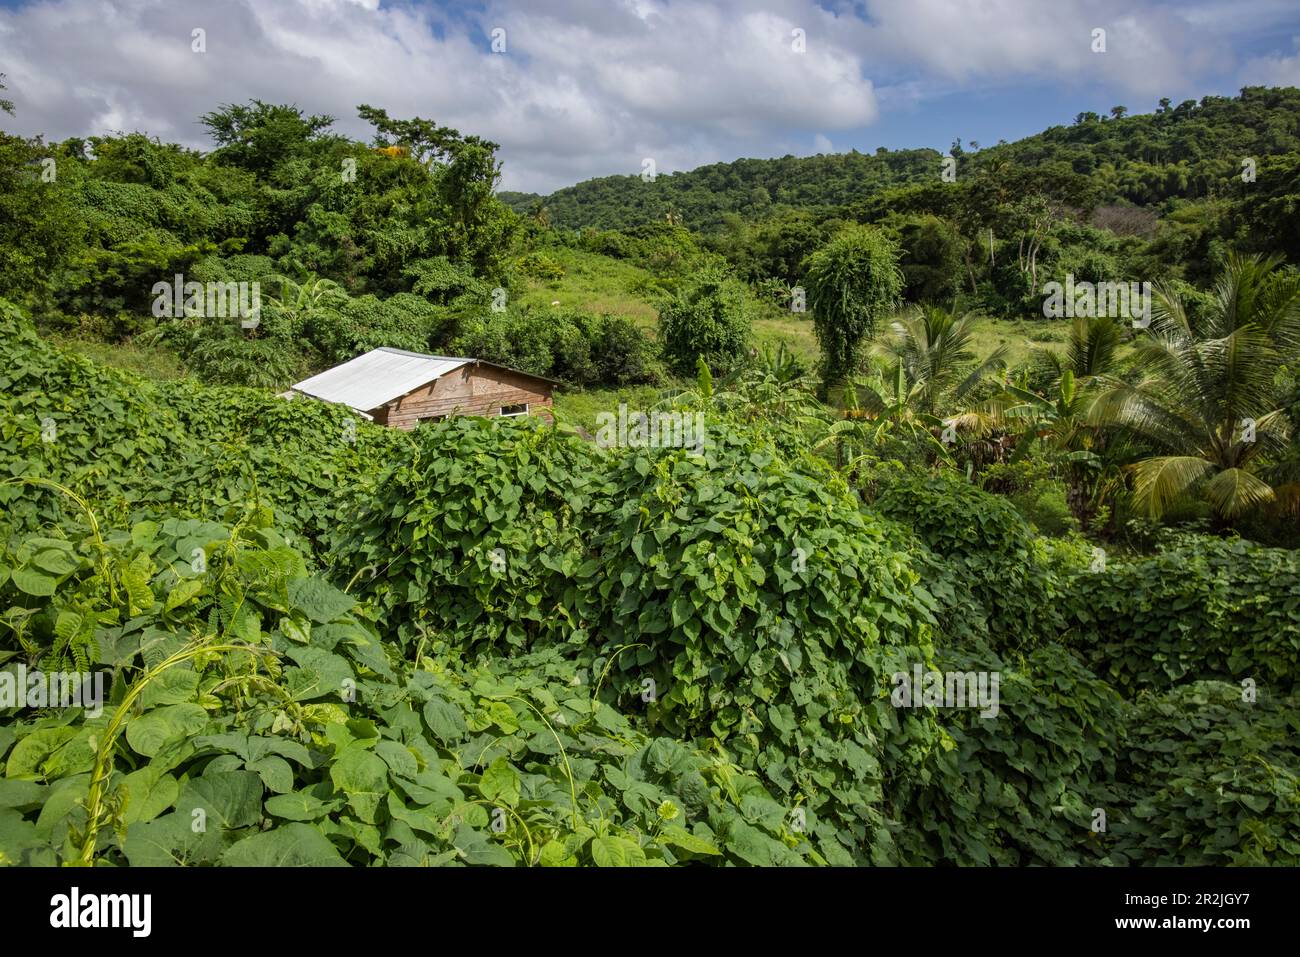 Wooden house amidst lush vegetation in the interior of the island, Saint David, Grenada, Caribbean Stock Photo